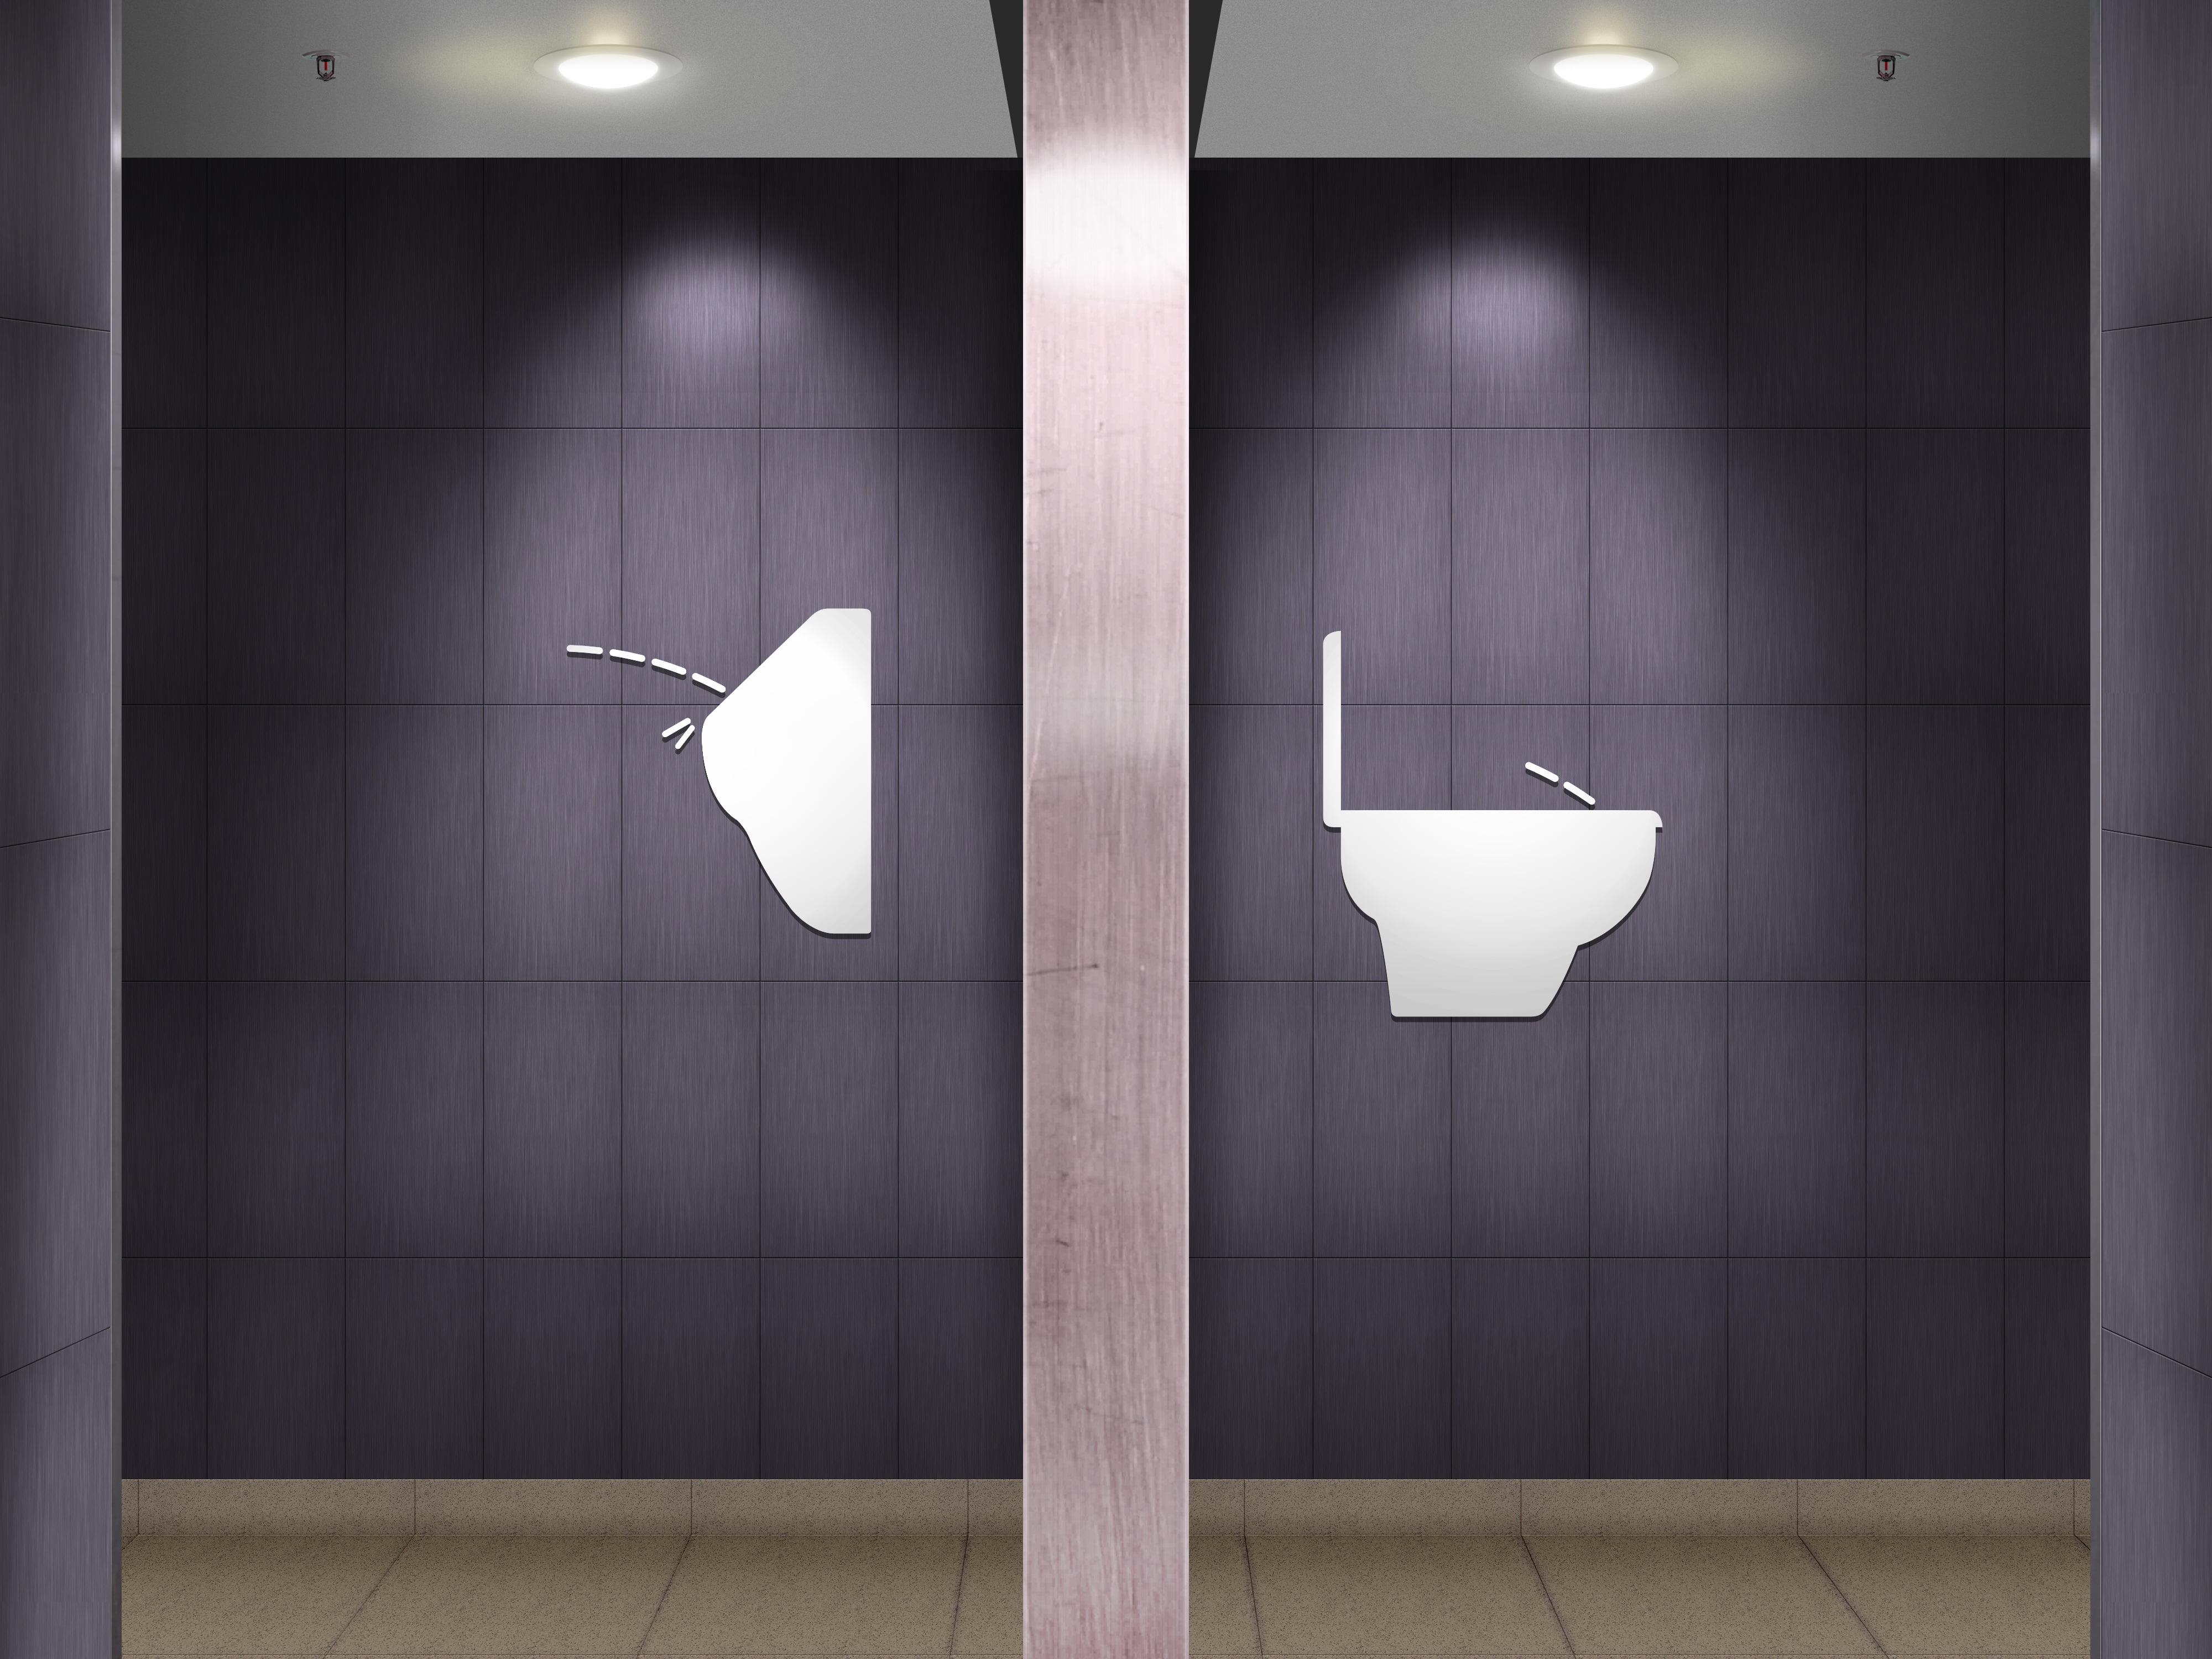 public restroom, toilets, pictogram, signs, humor